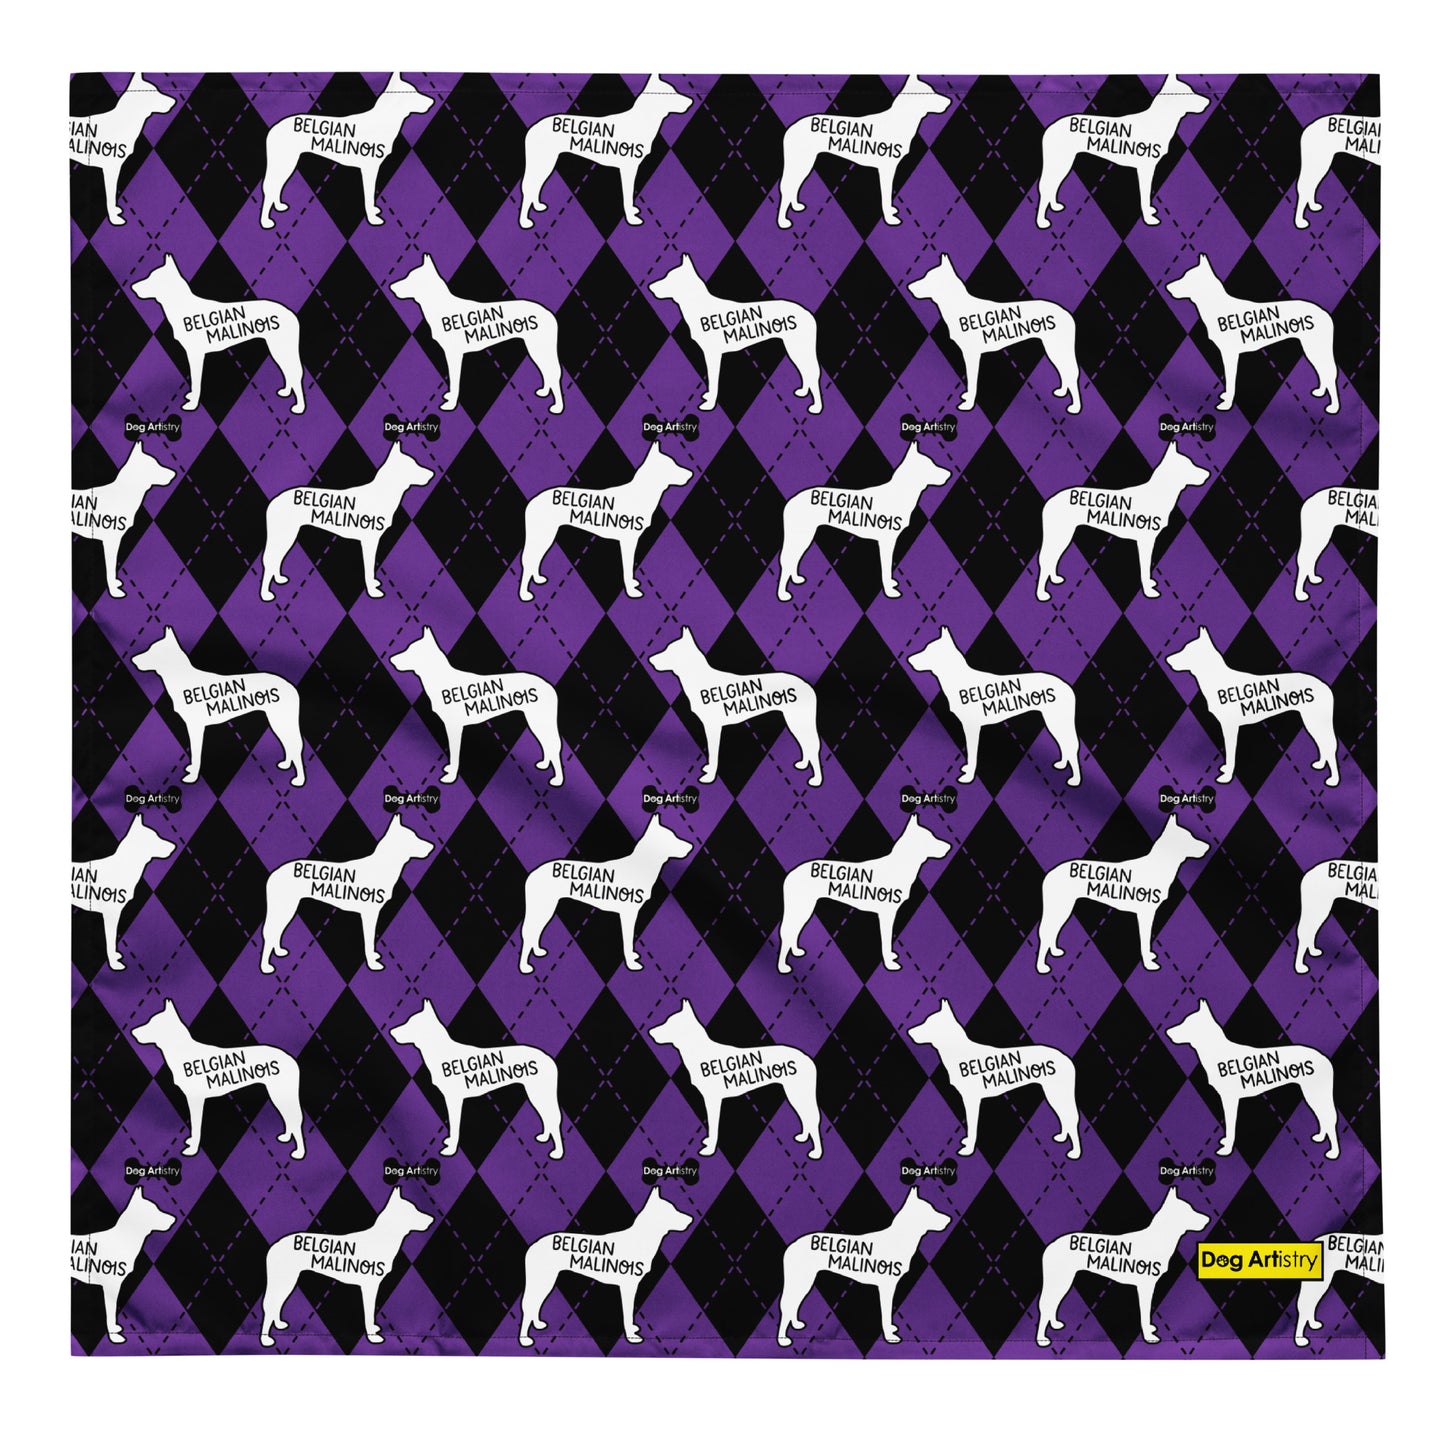 Belgian Malinois Argyle Purple and Black All-over print bandana